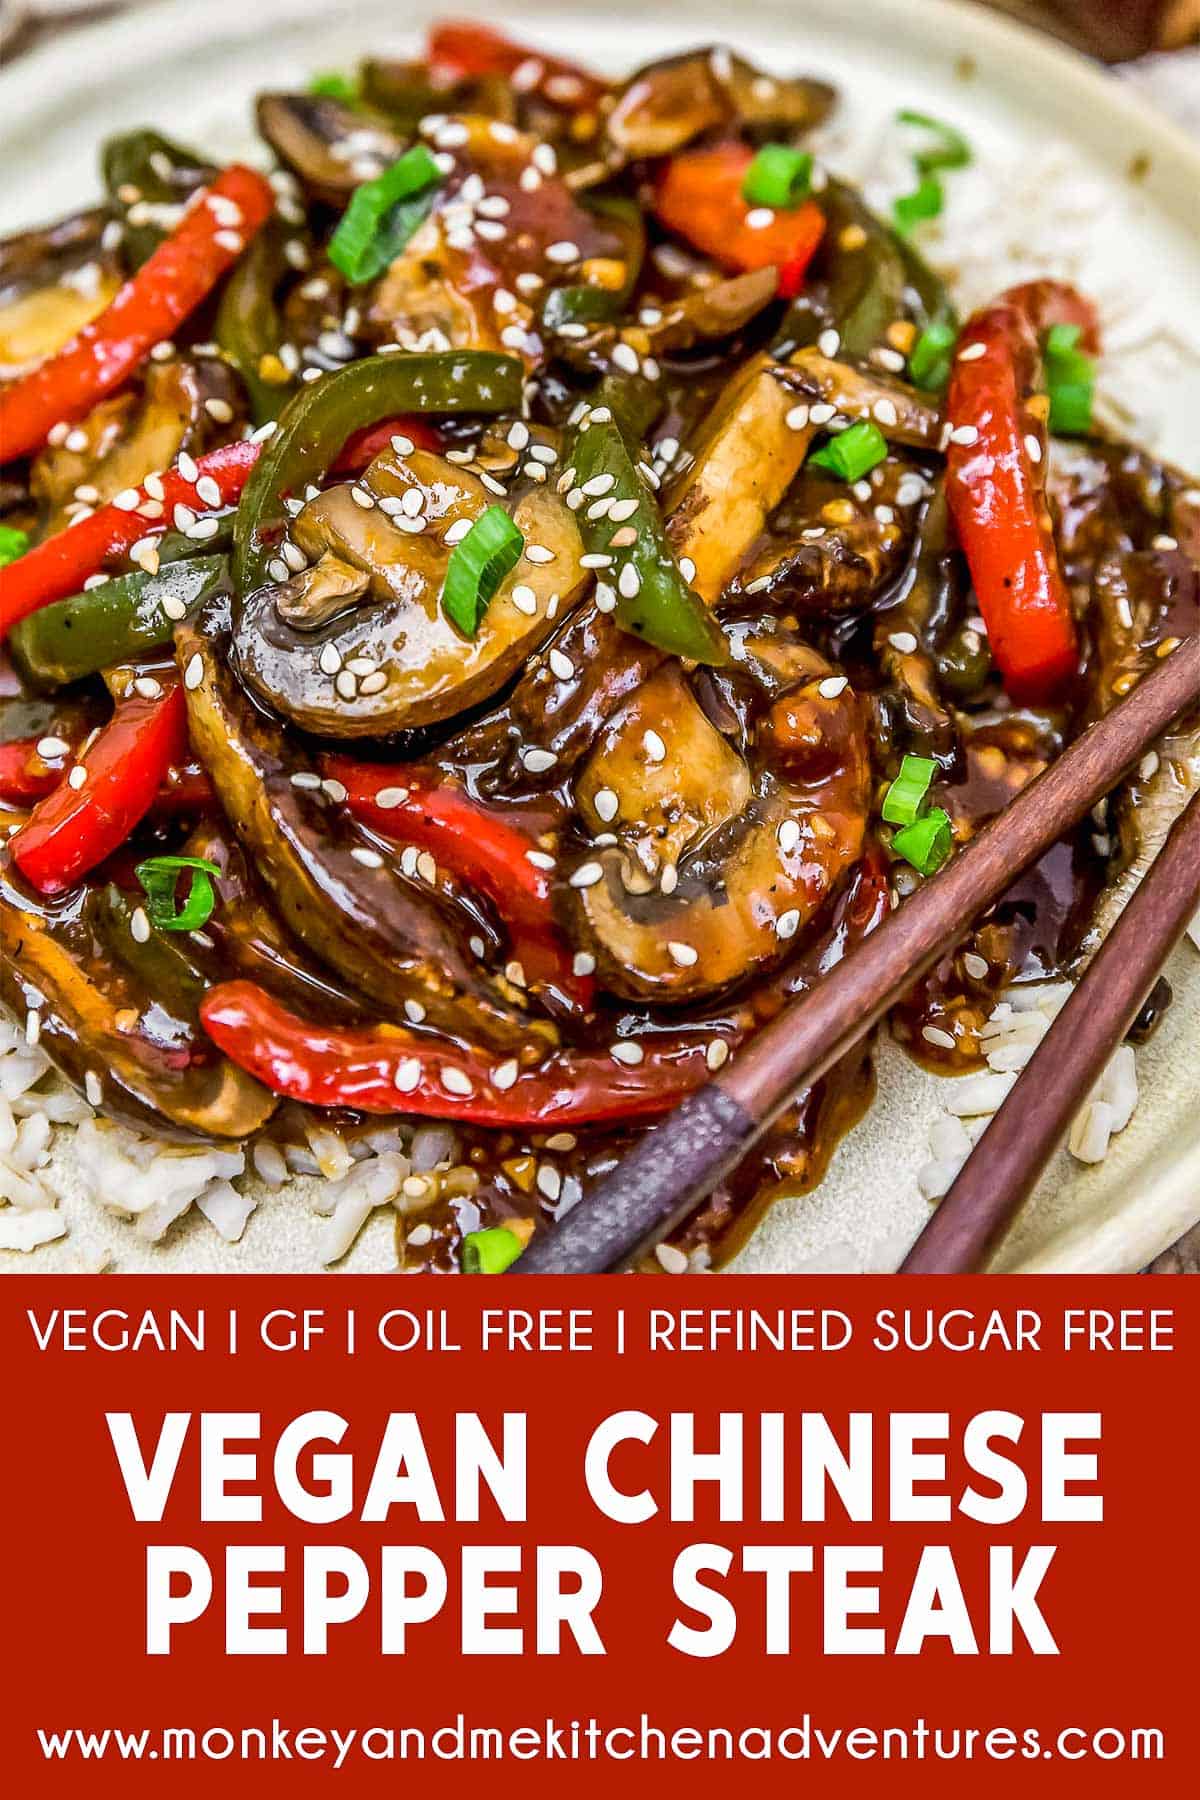 Vegan Chinese Pepper “Steak” with text description